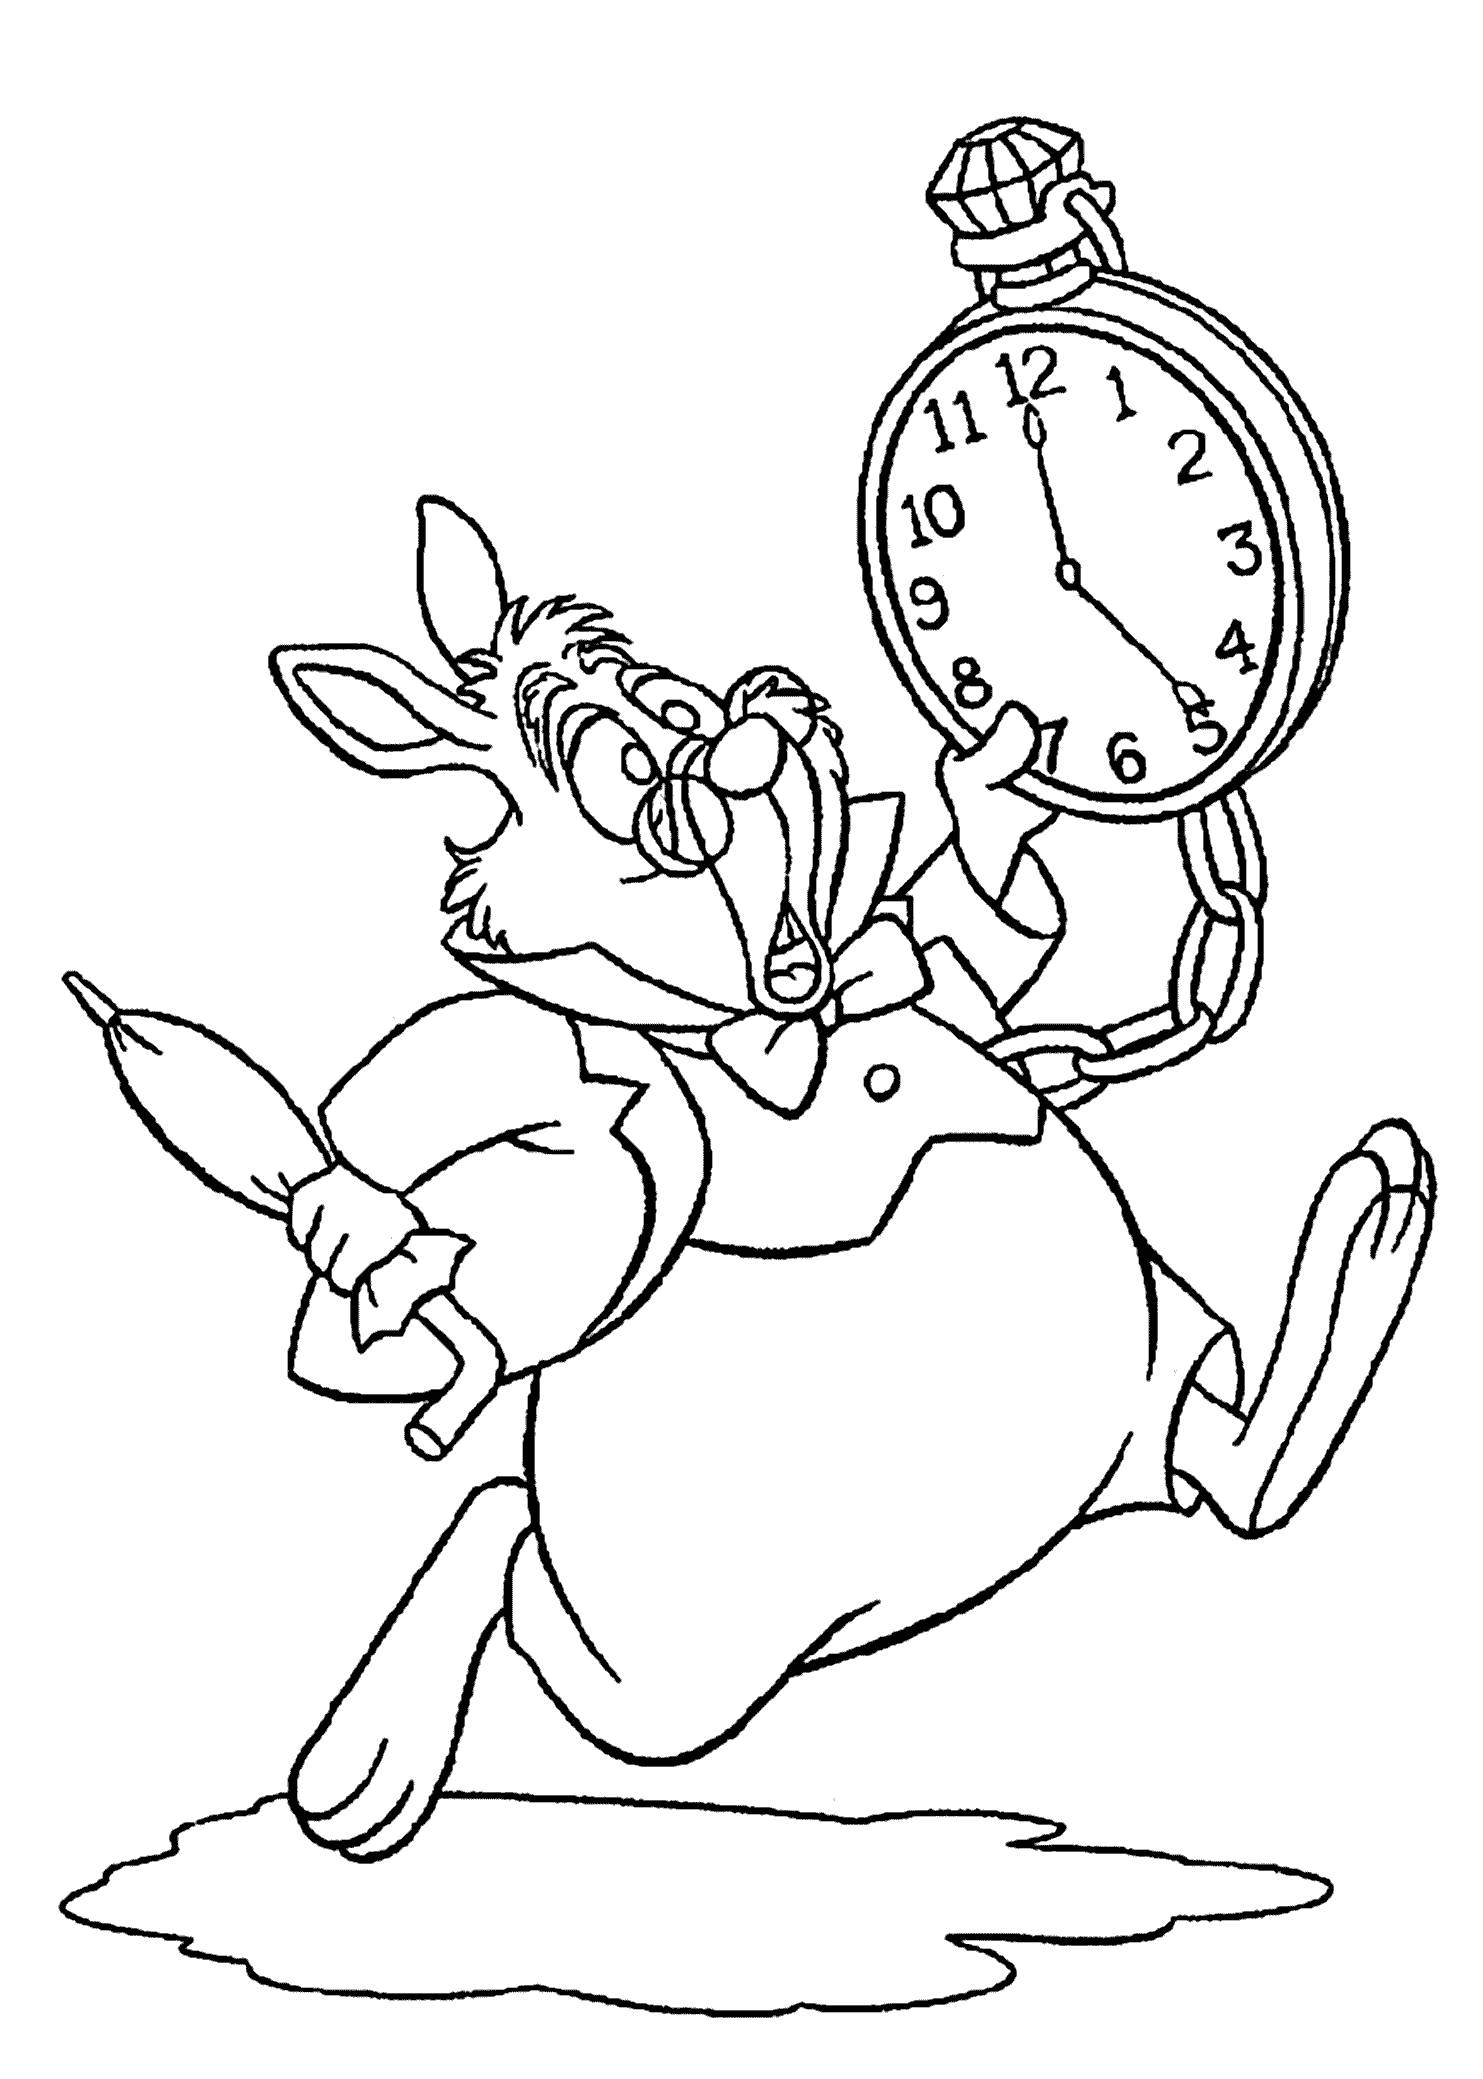 Rabbit with clock